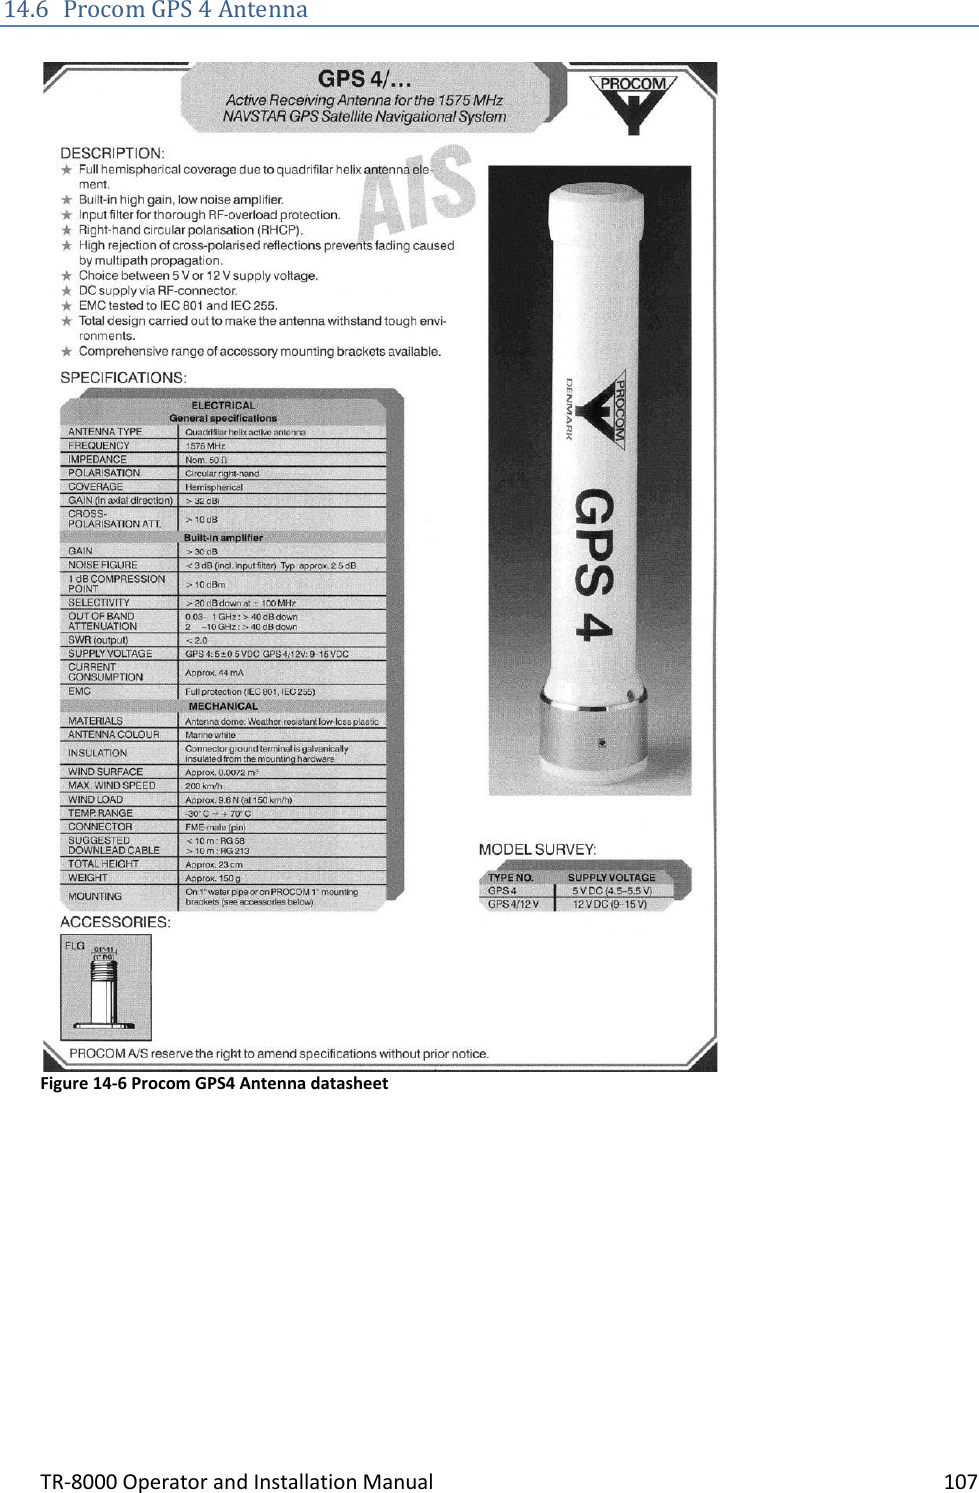 TR-8000 Operator and Installation Manual    107  14.6 Procom GPS 4 Antenna   Figure 14-6 Procom GPS4 Antenna datasheet    